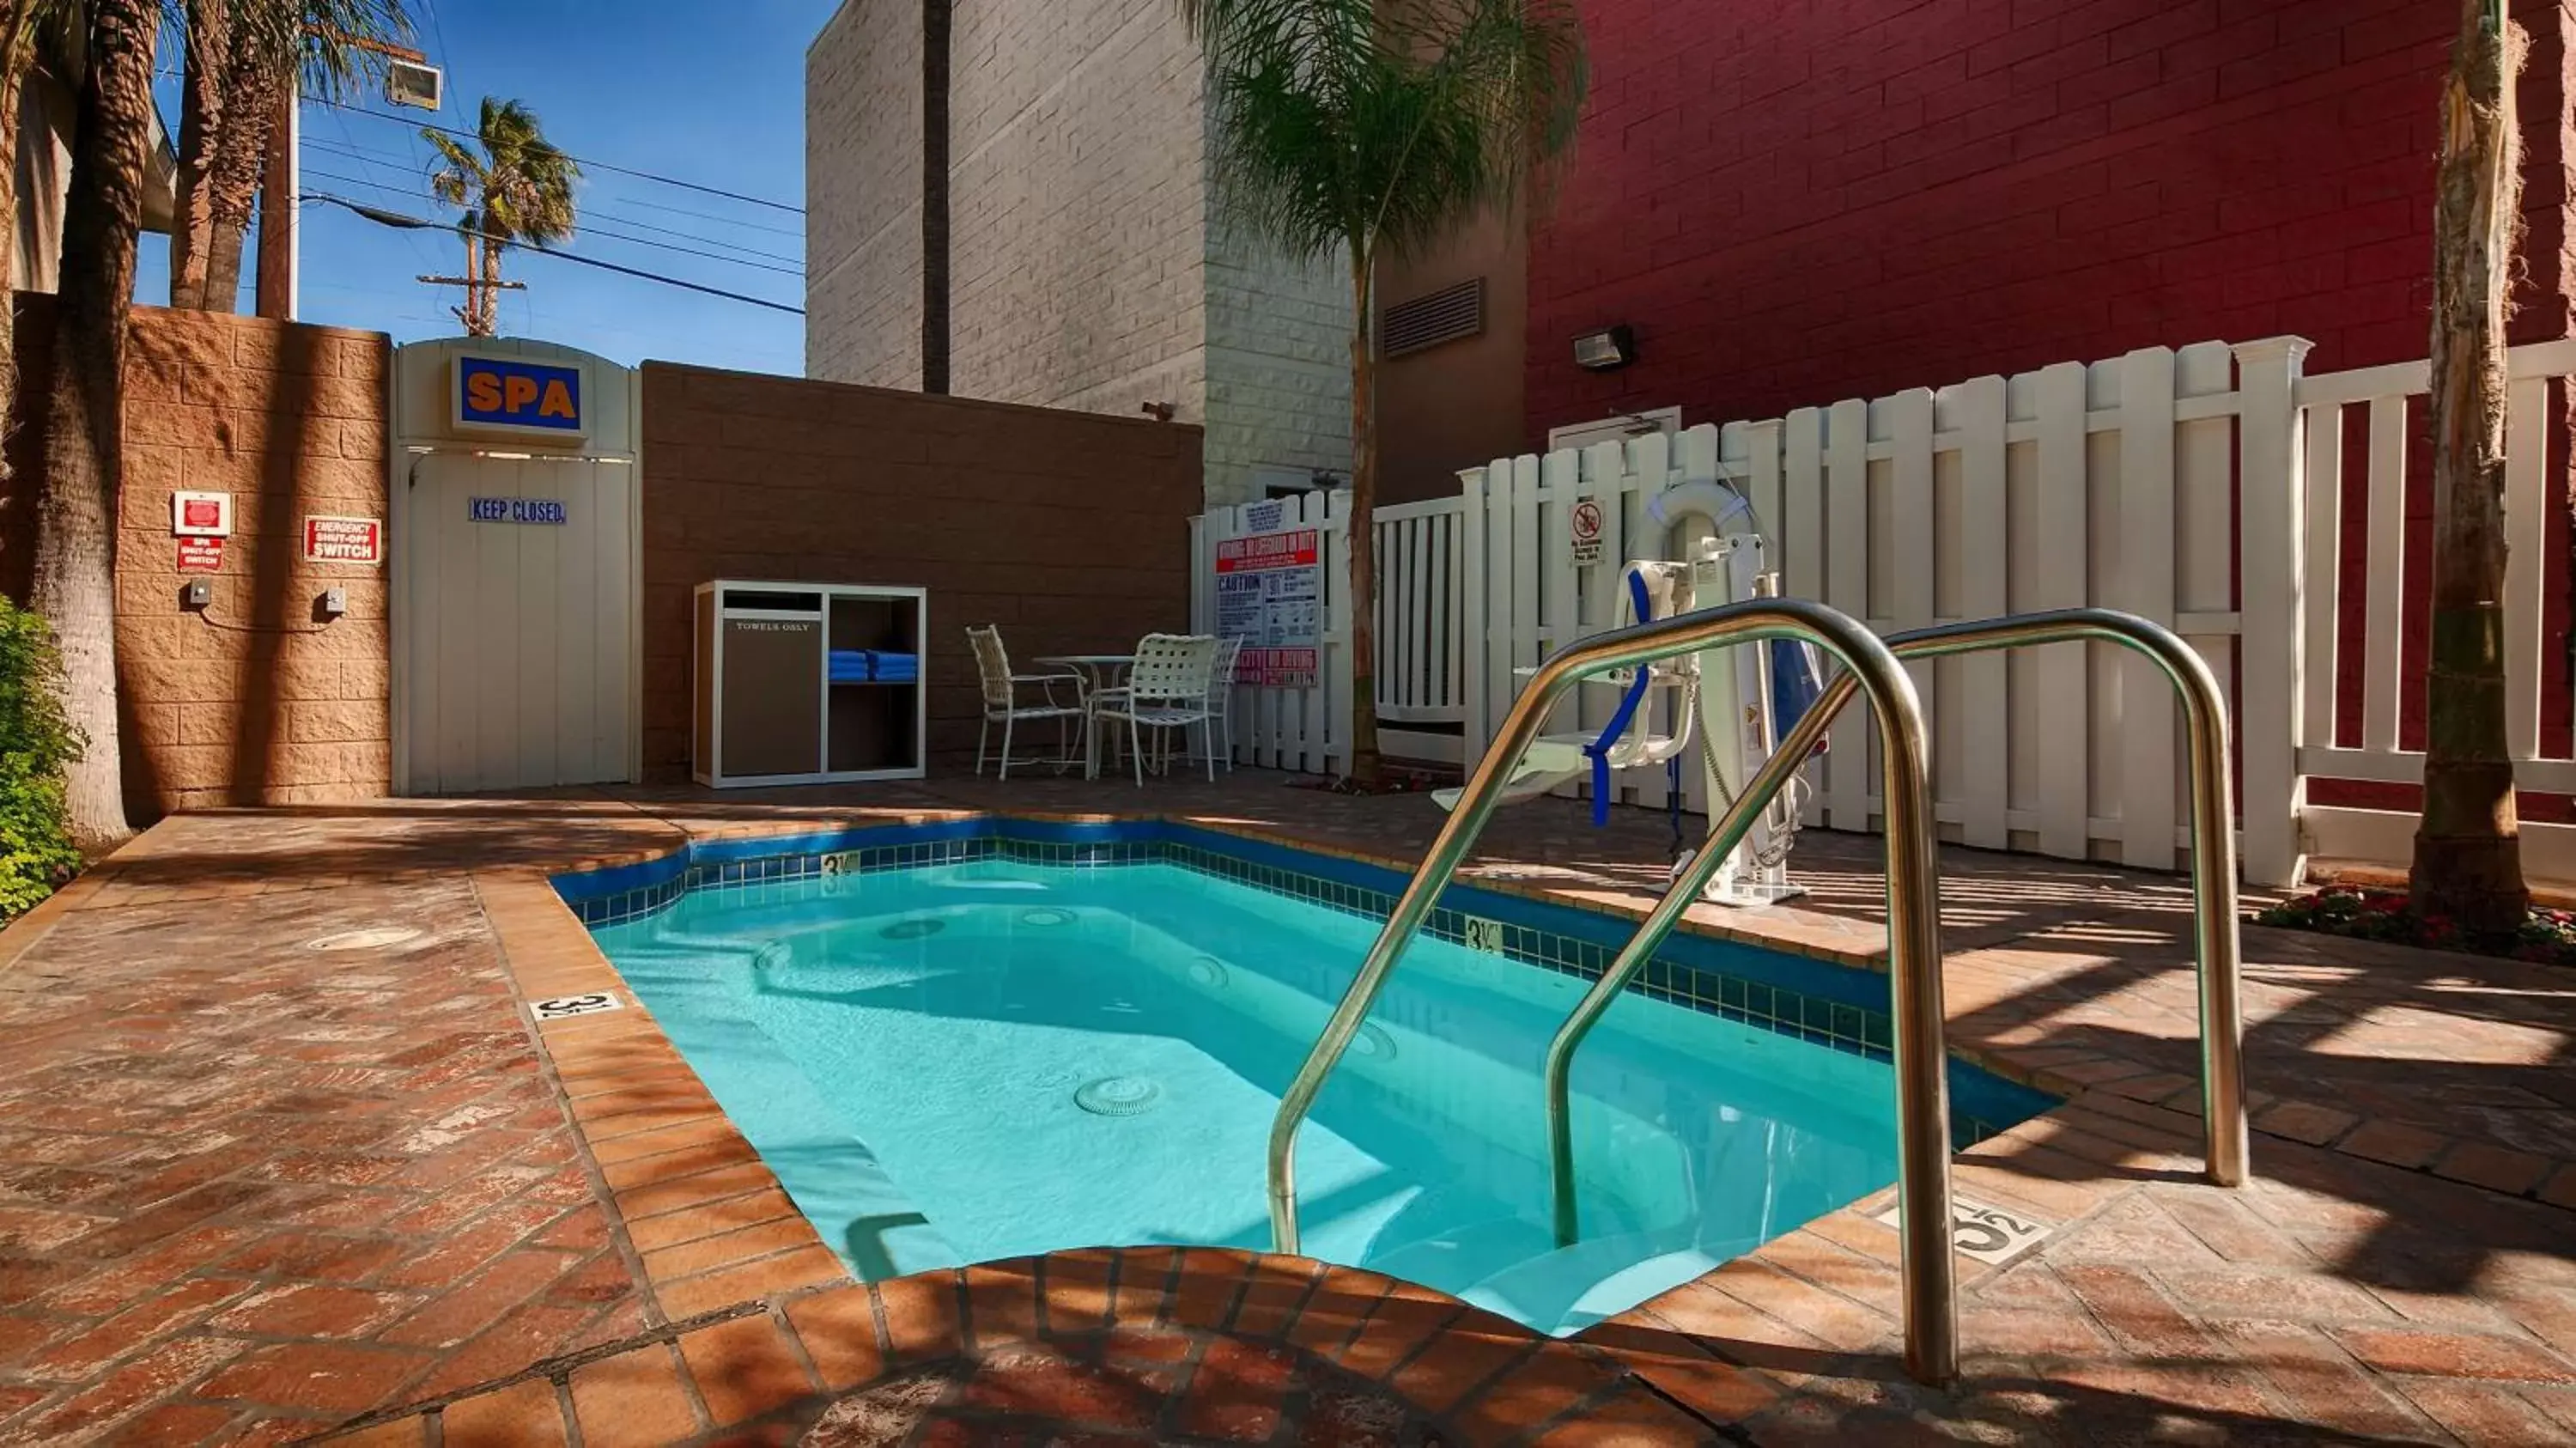 On site, Swimming Pool in Best Western Plus Carriage Inn